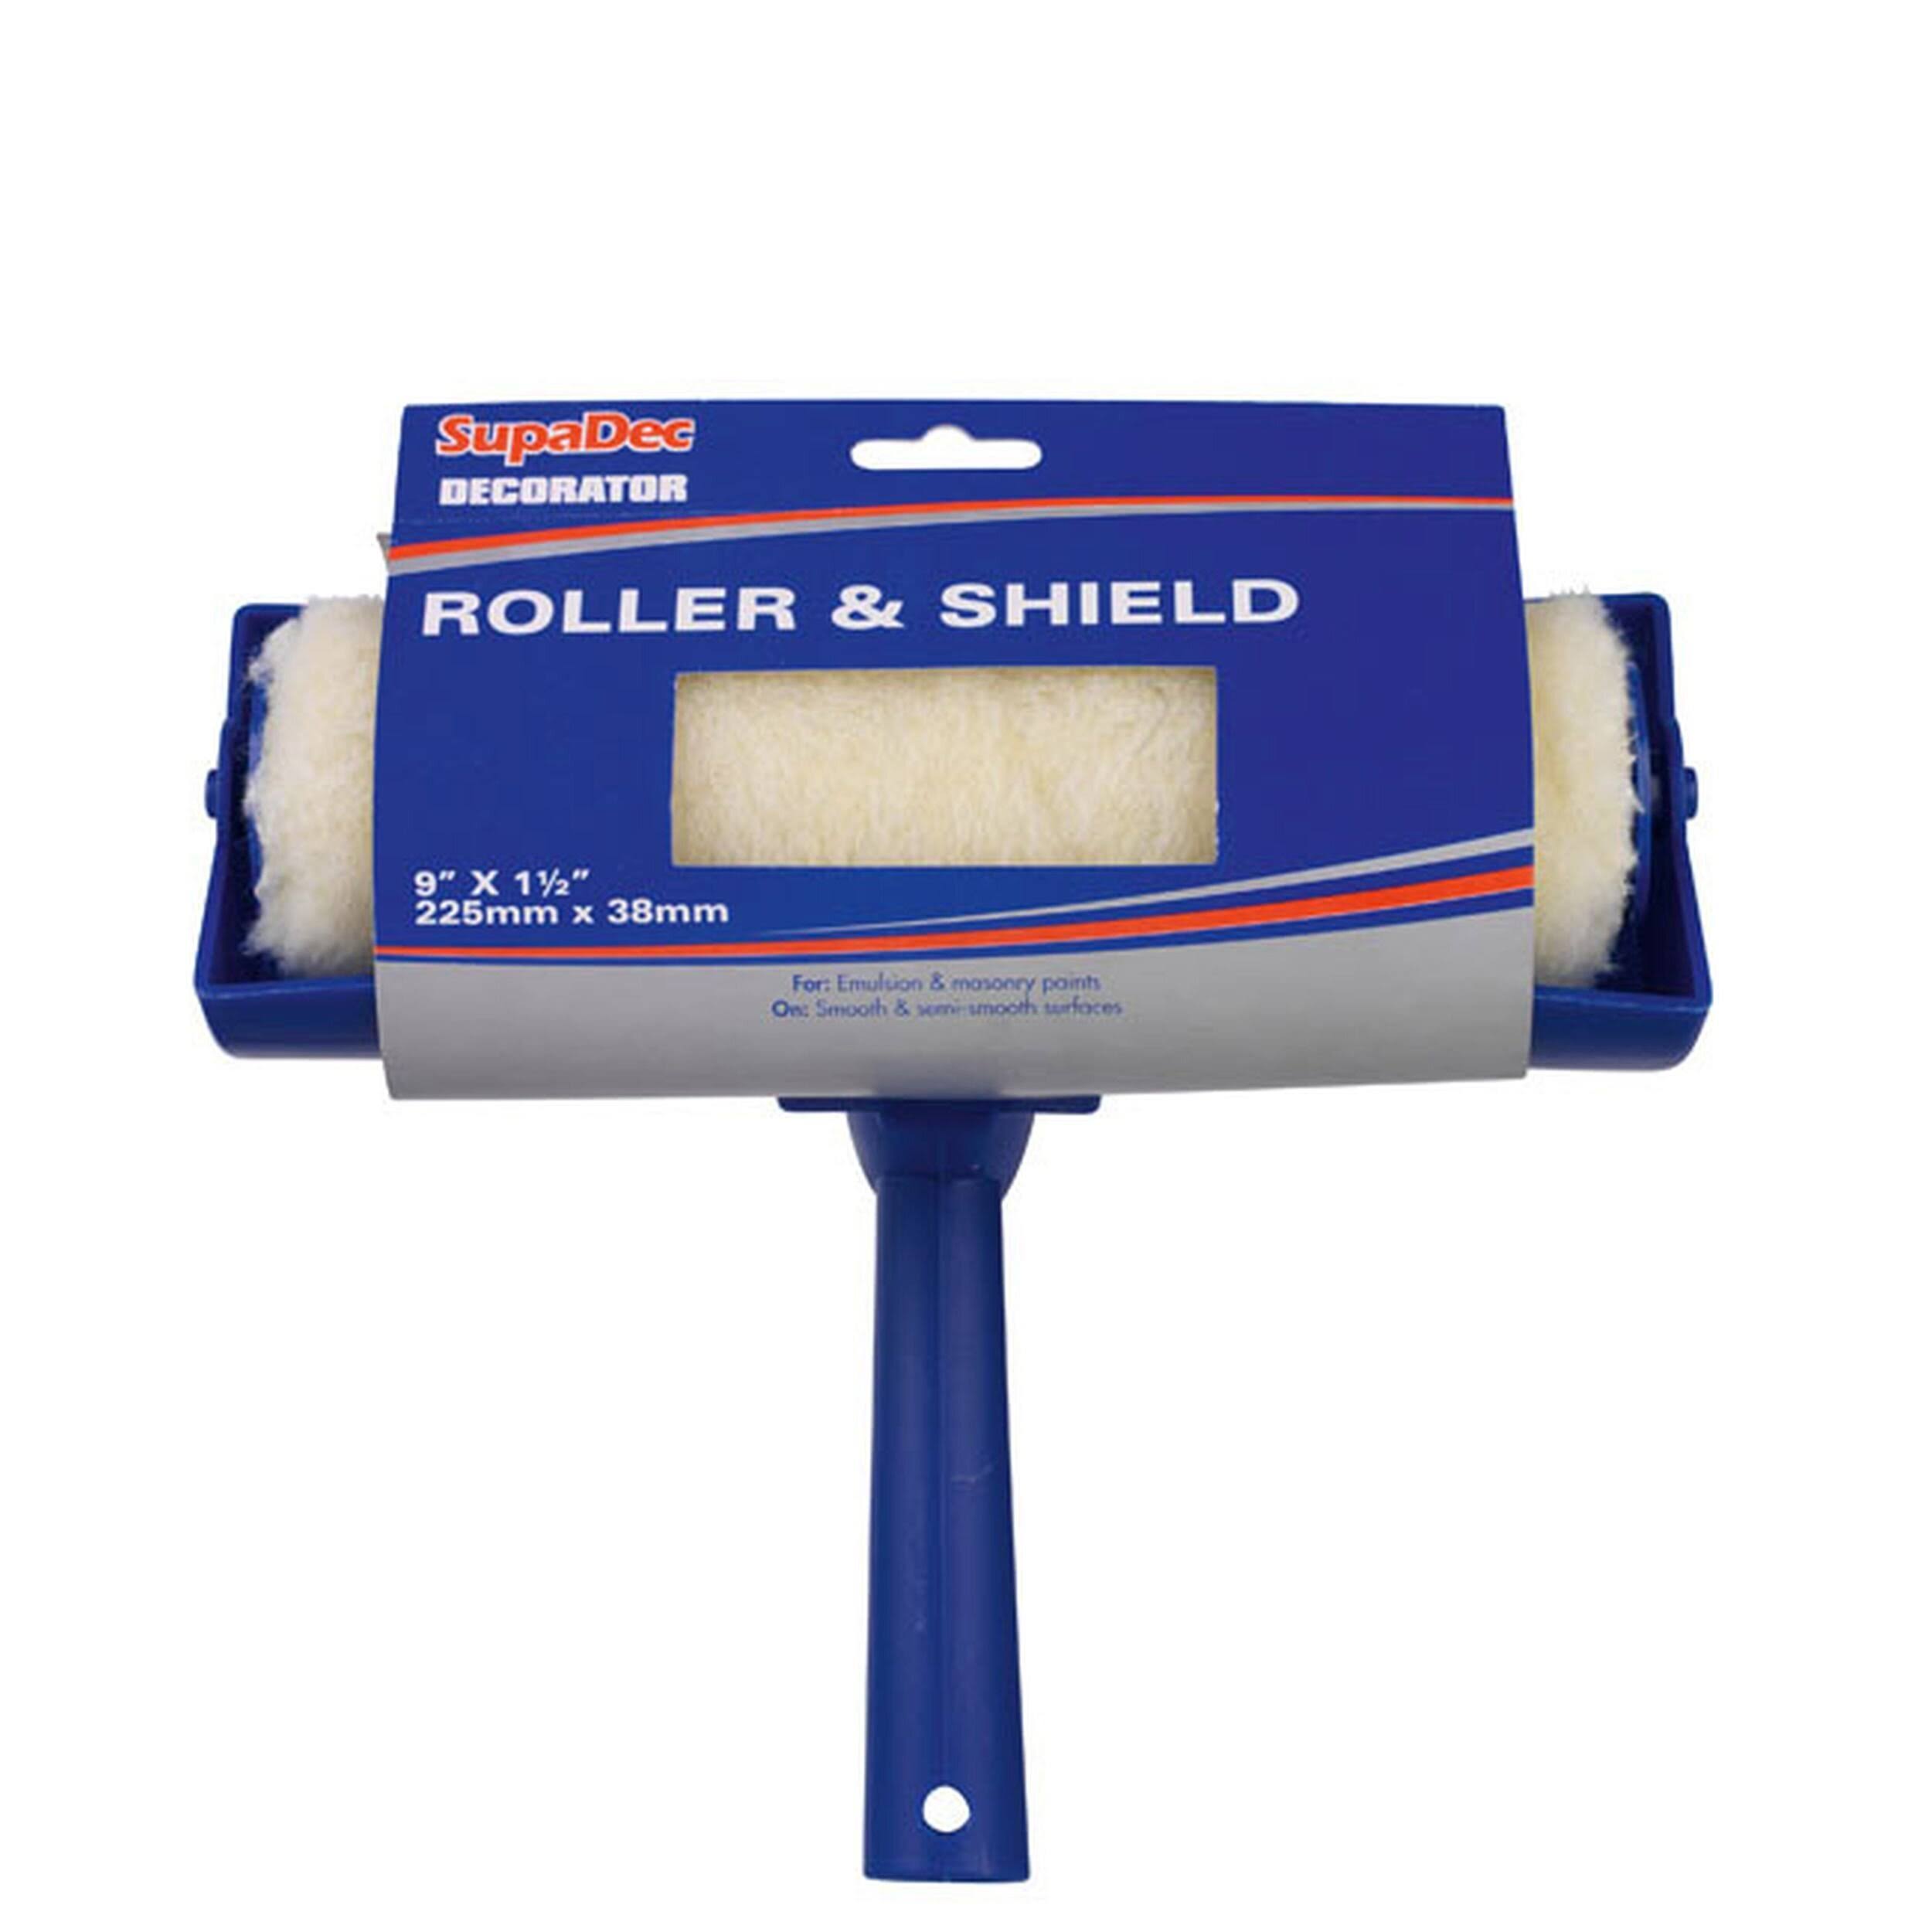 Supadec Decorator Roller & Shield 9" x 1.5" / 225mm x 38mm